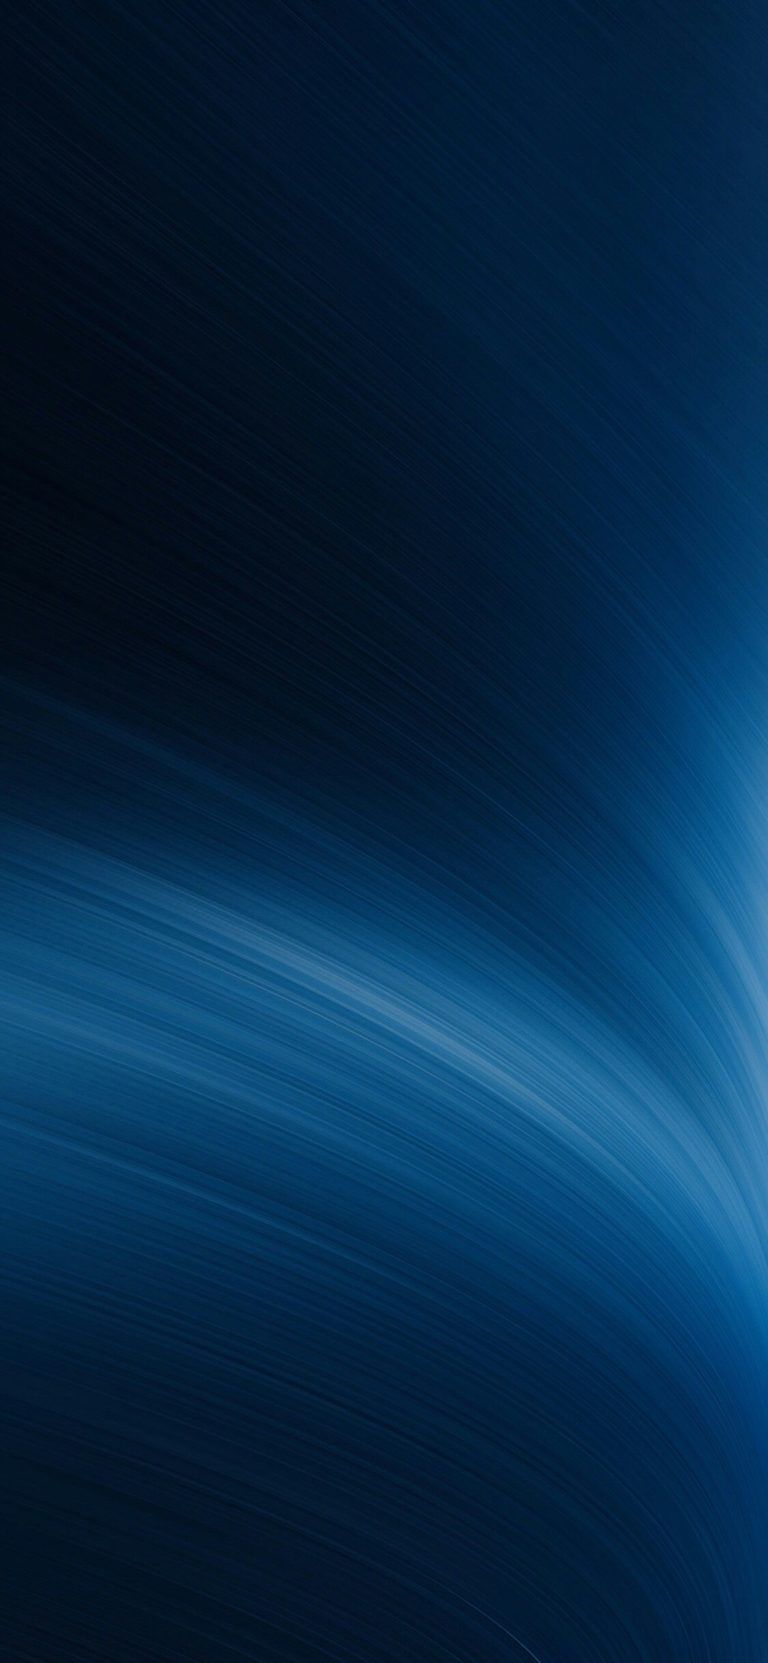 Dark Blue Abstract iPhone Wallpaper Free Dark Blue Abstract iPhone Background